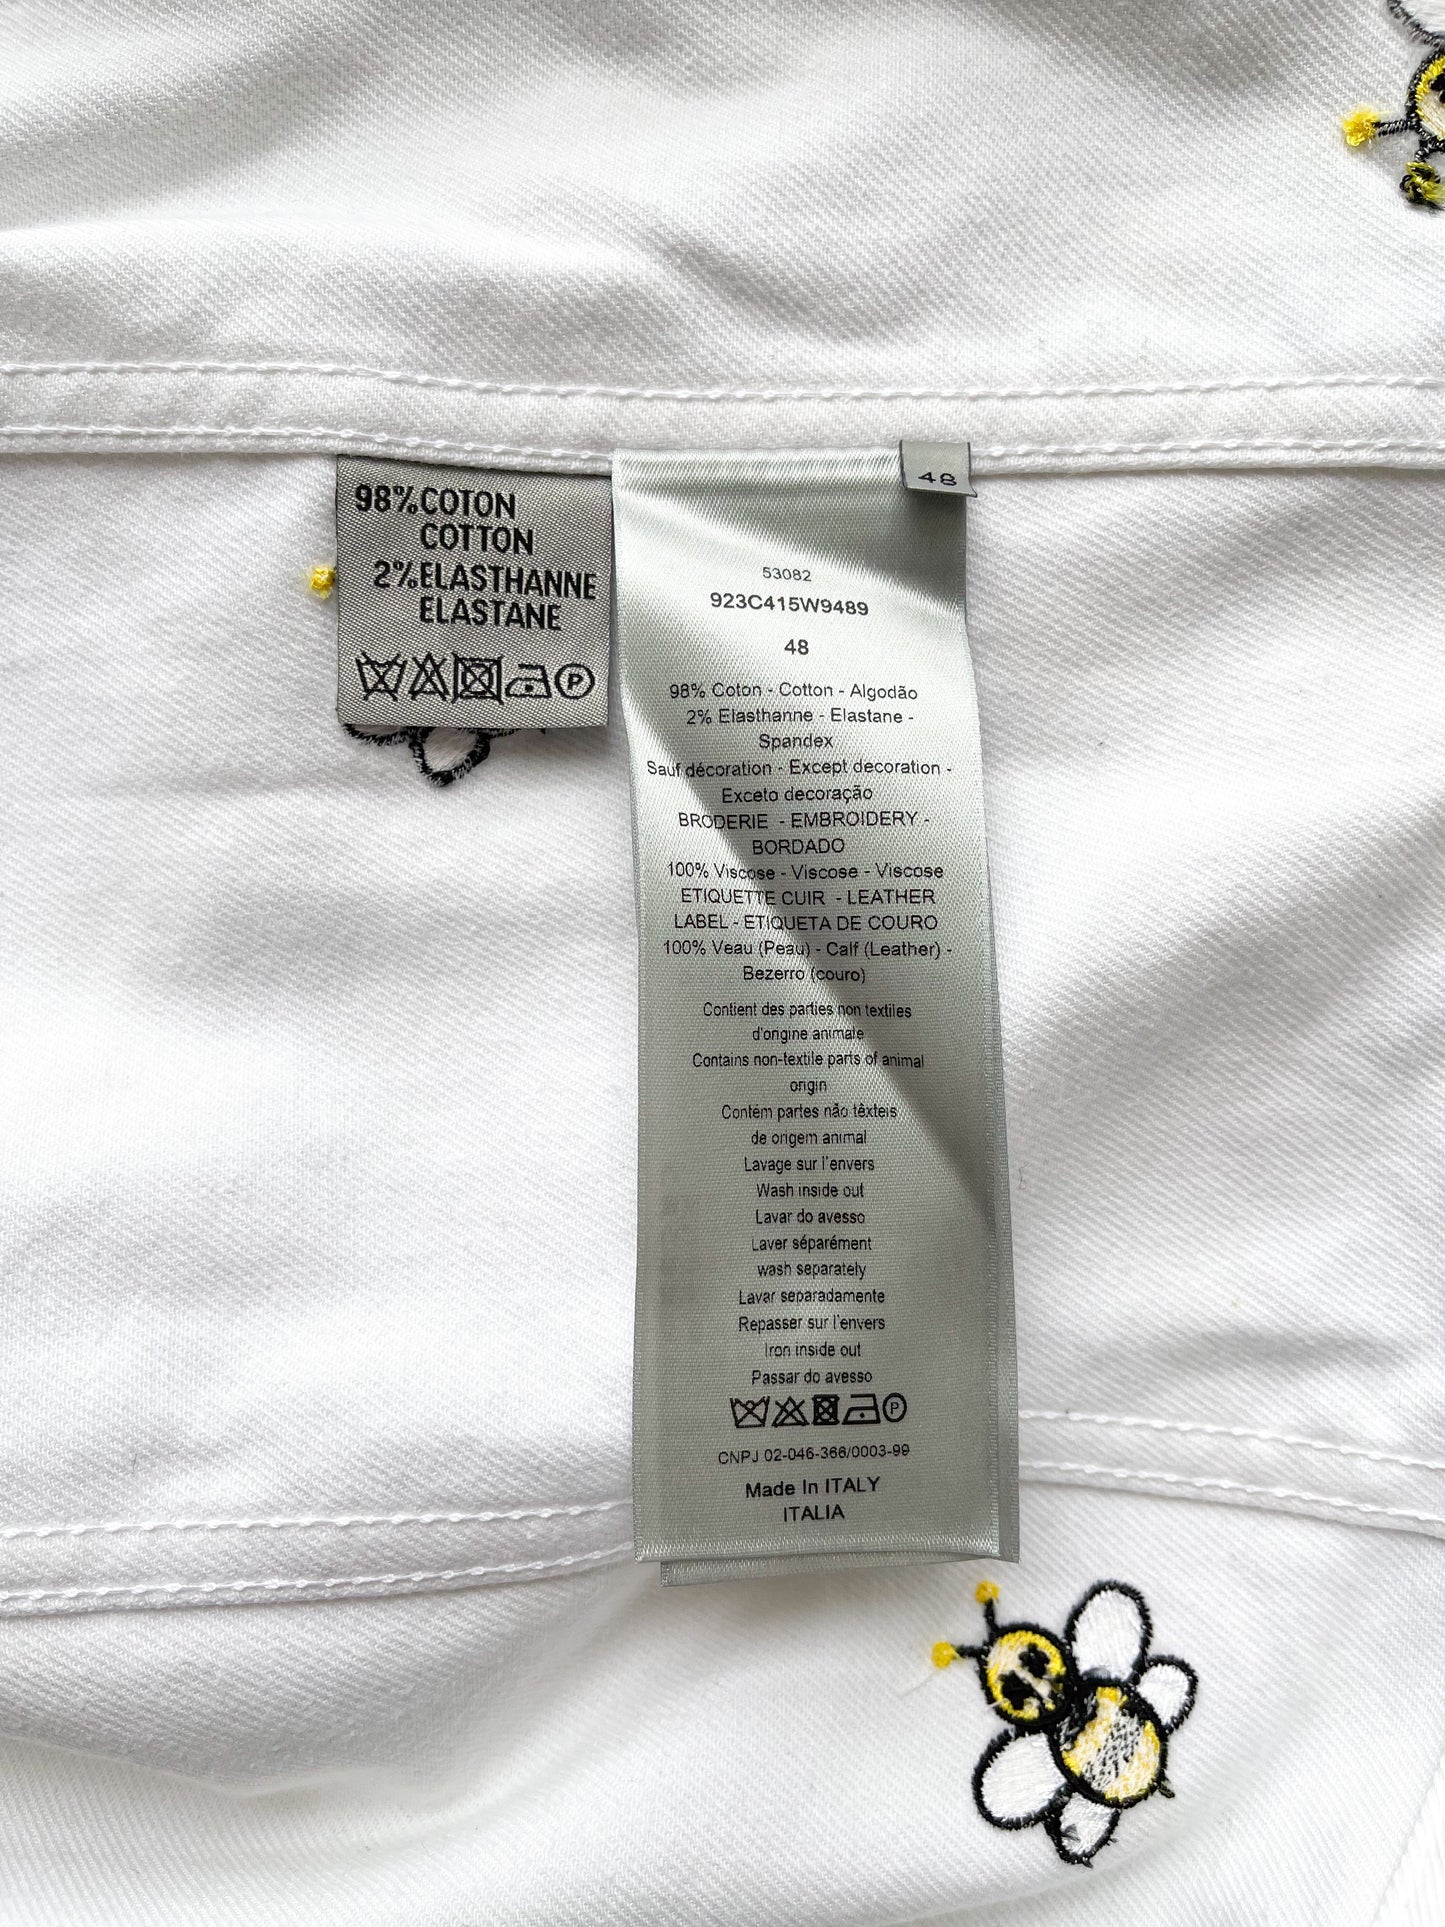 Dior Kaws White Bee Denim Jacket